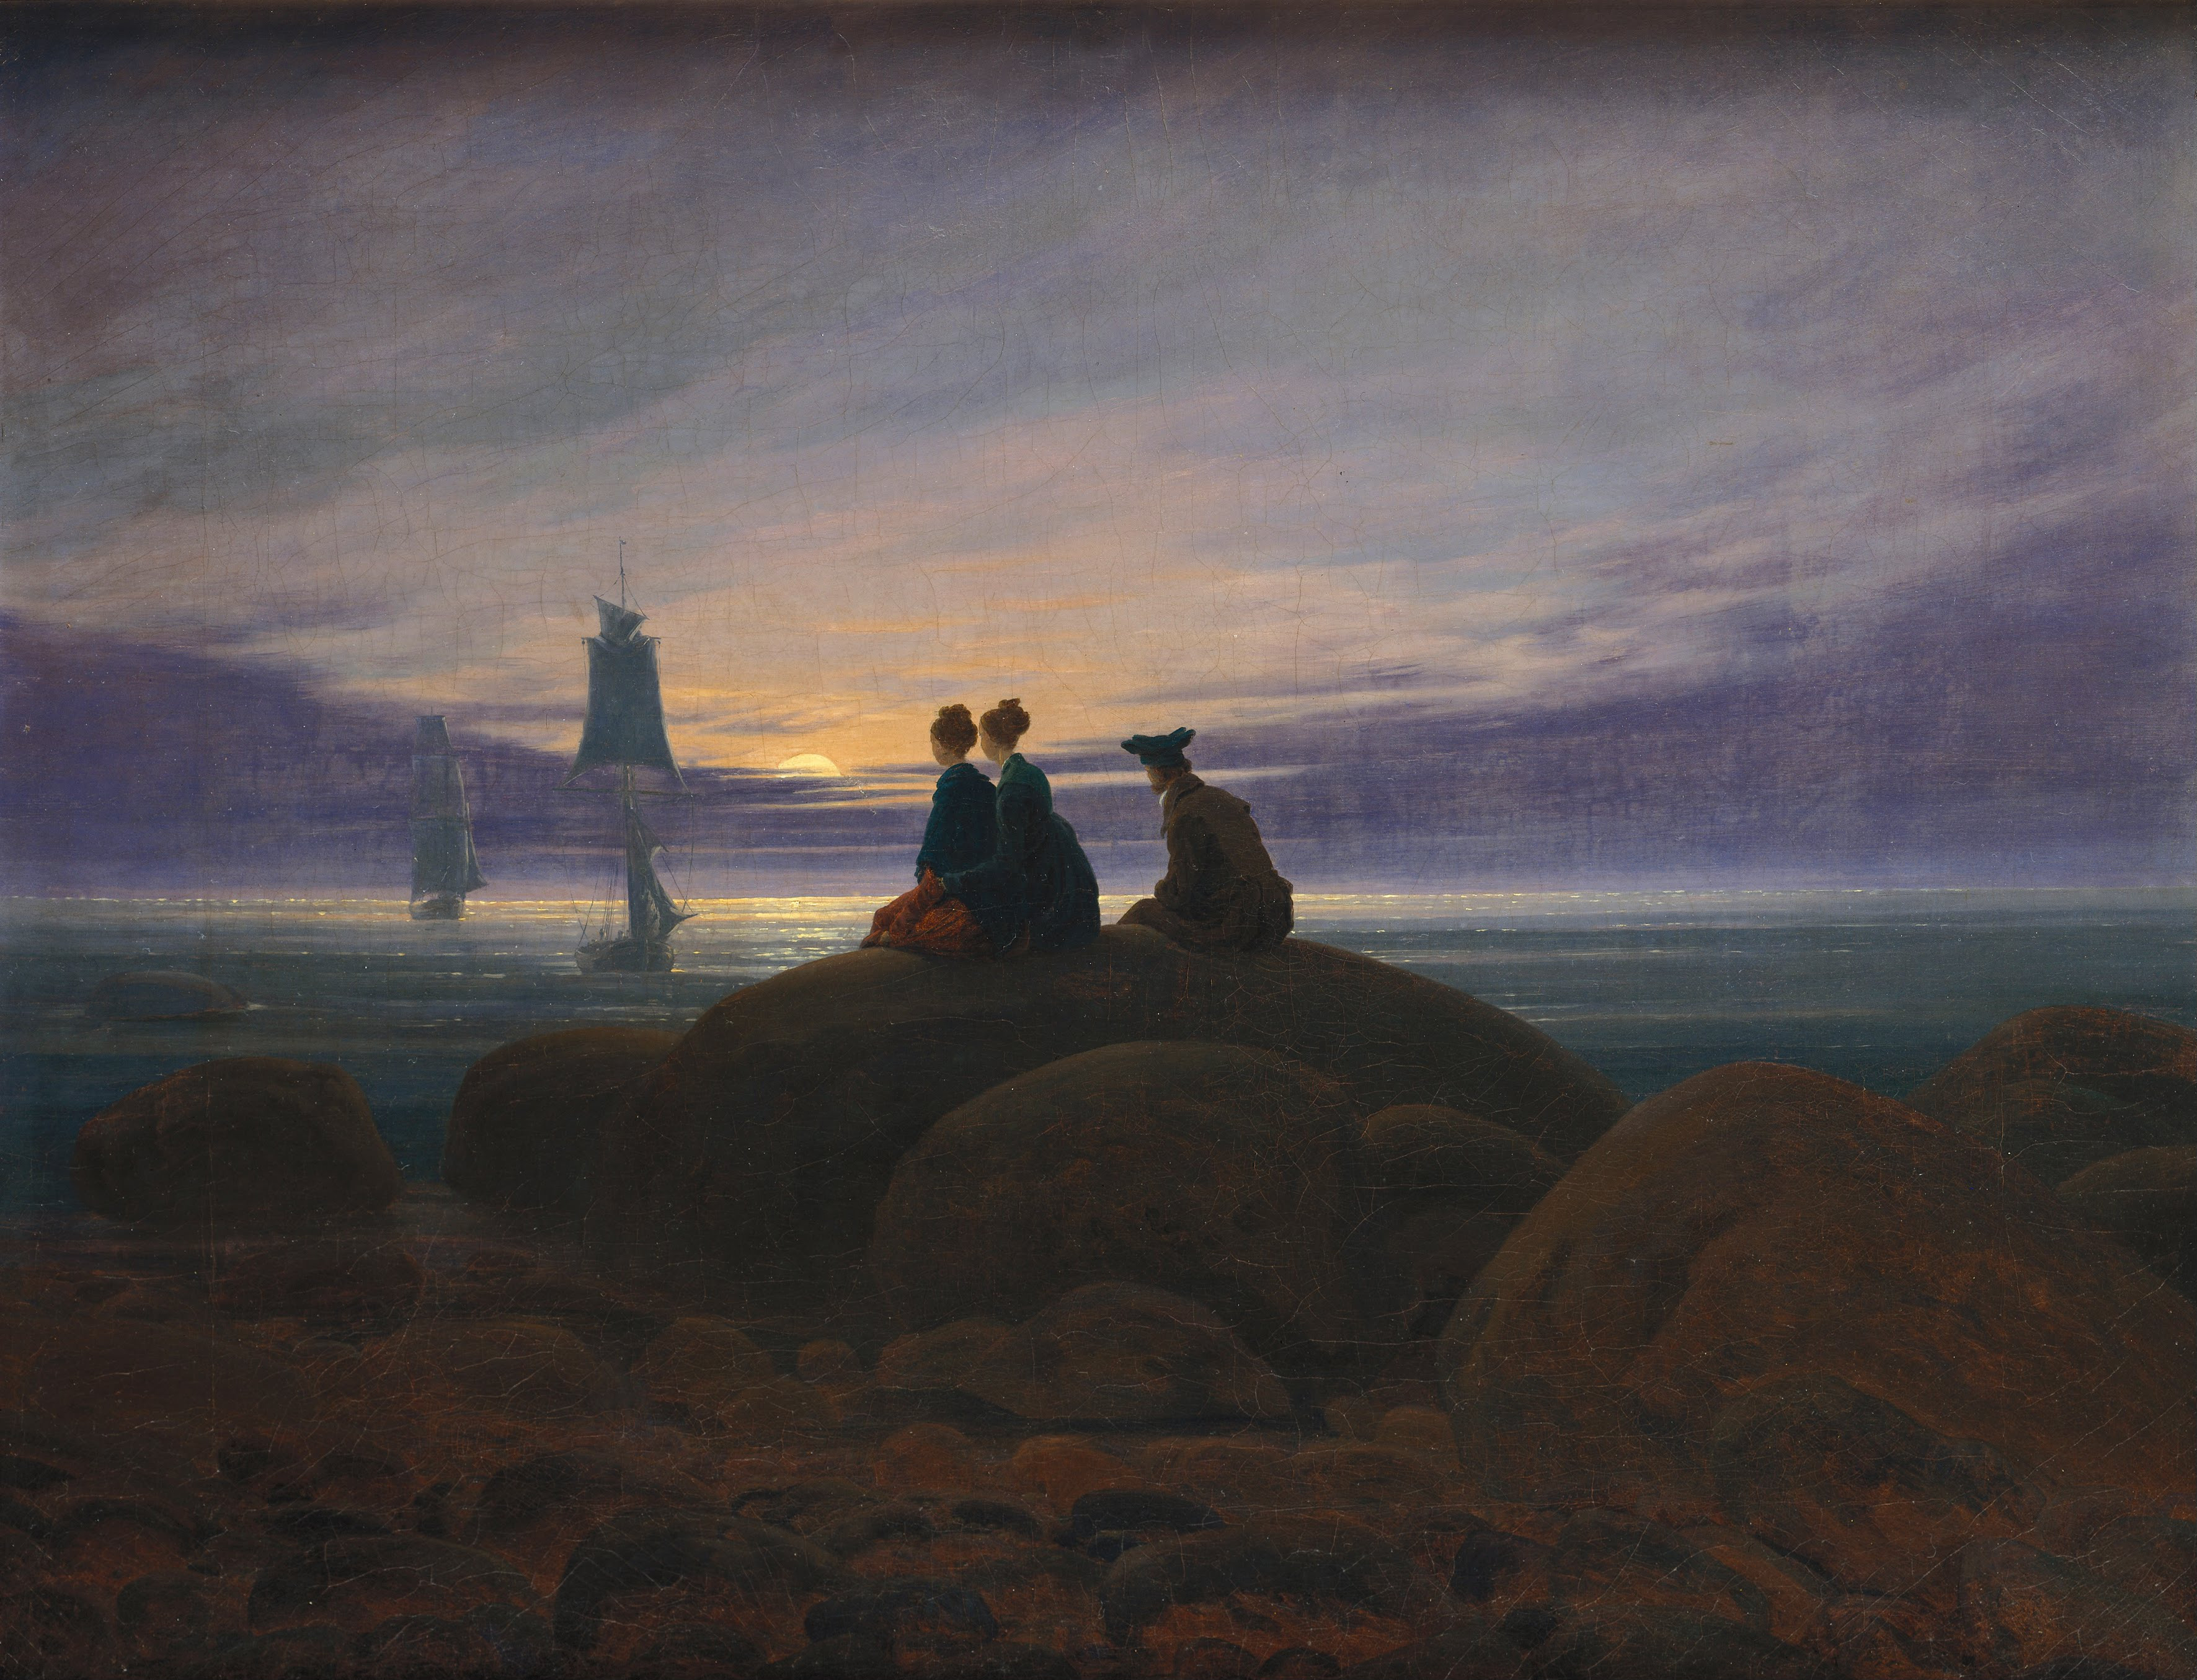 Moonrise by the Sea by Caspar David Friedrich - 1822 - 135 x 170 cm Alte Nationalgalerie